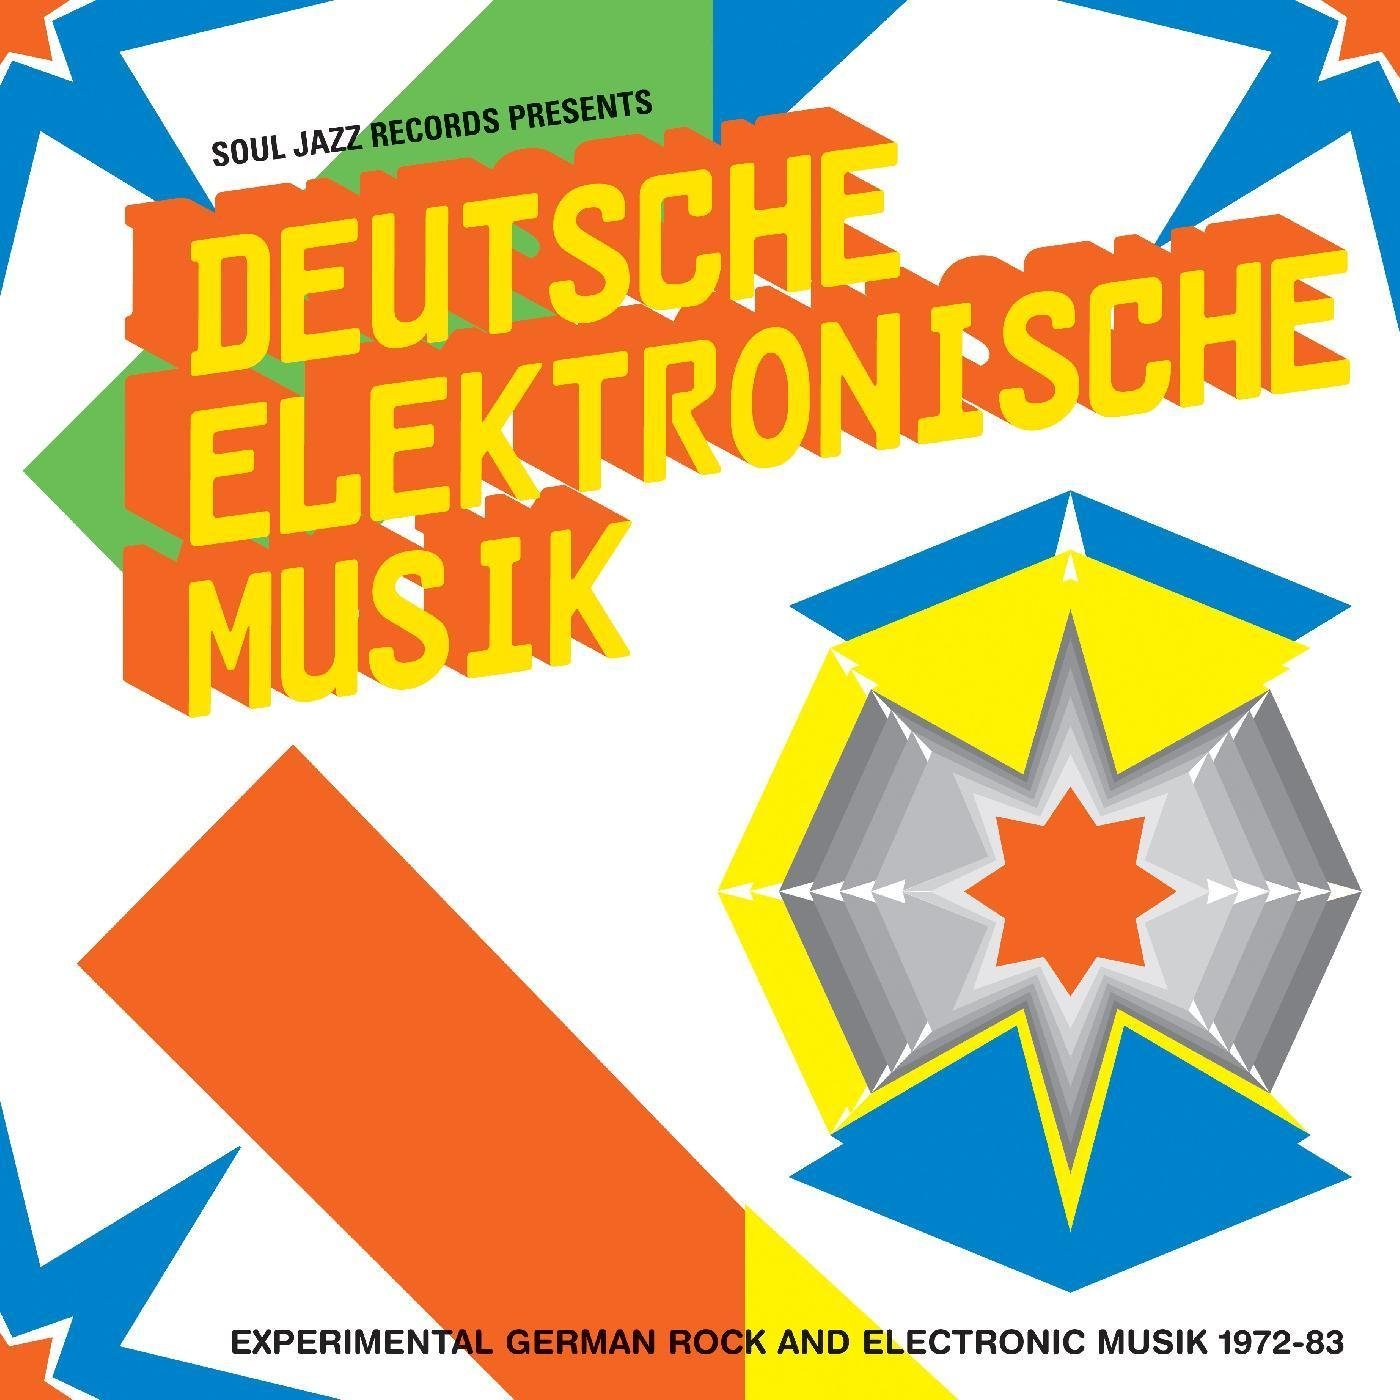 V.A. / DEUTSCHE ELEKTRONISCHE MUSIK:EXPERIMENTAL GERMAN ROCK AND ELECTRONIC MUSIC 1972-83 VOL.2 (2LP)